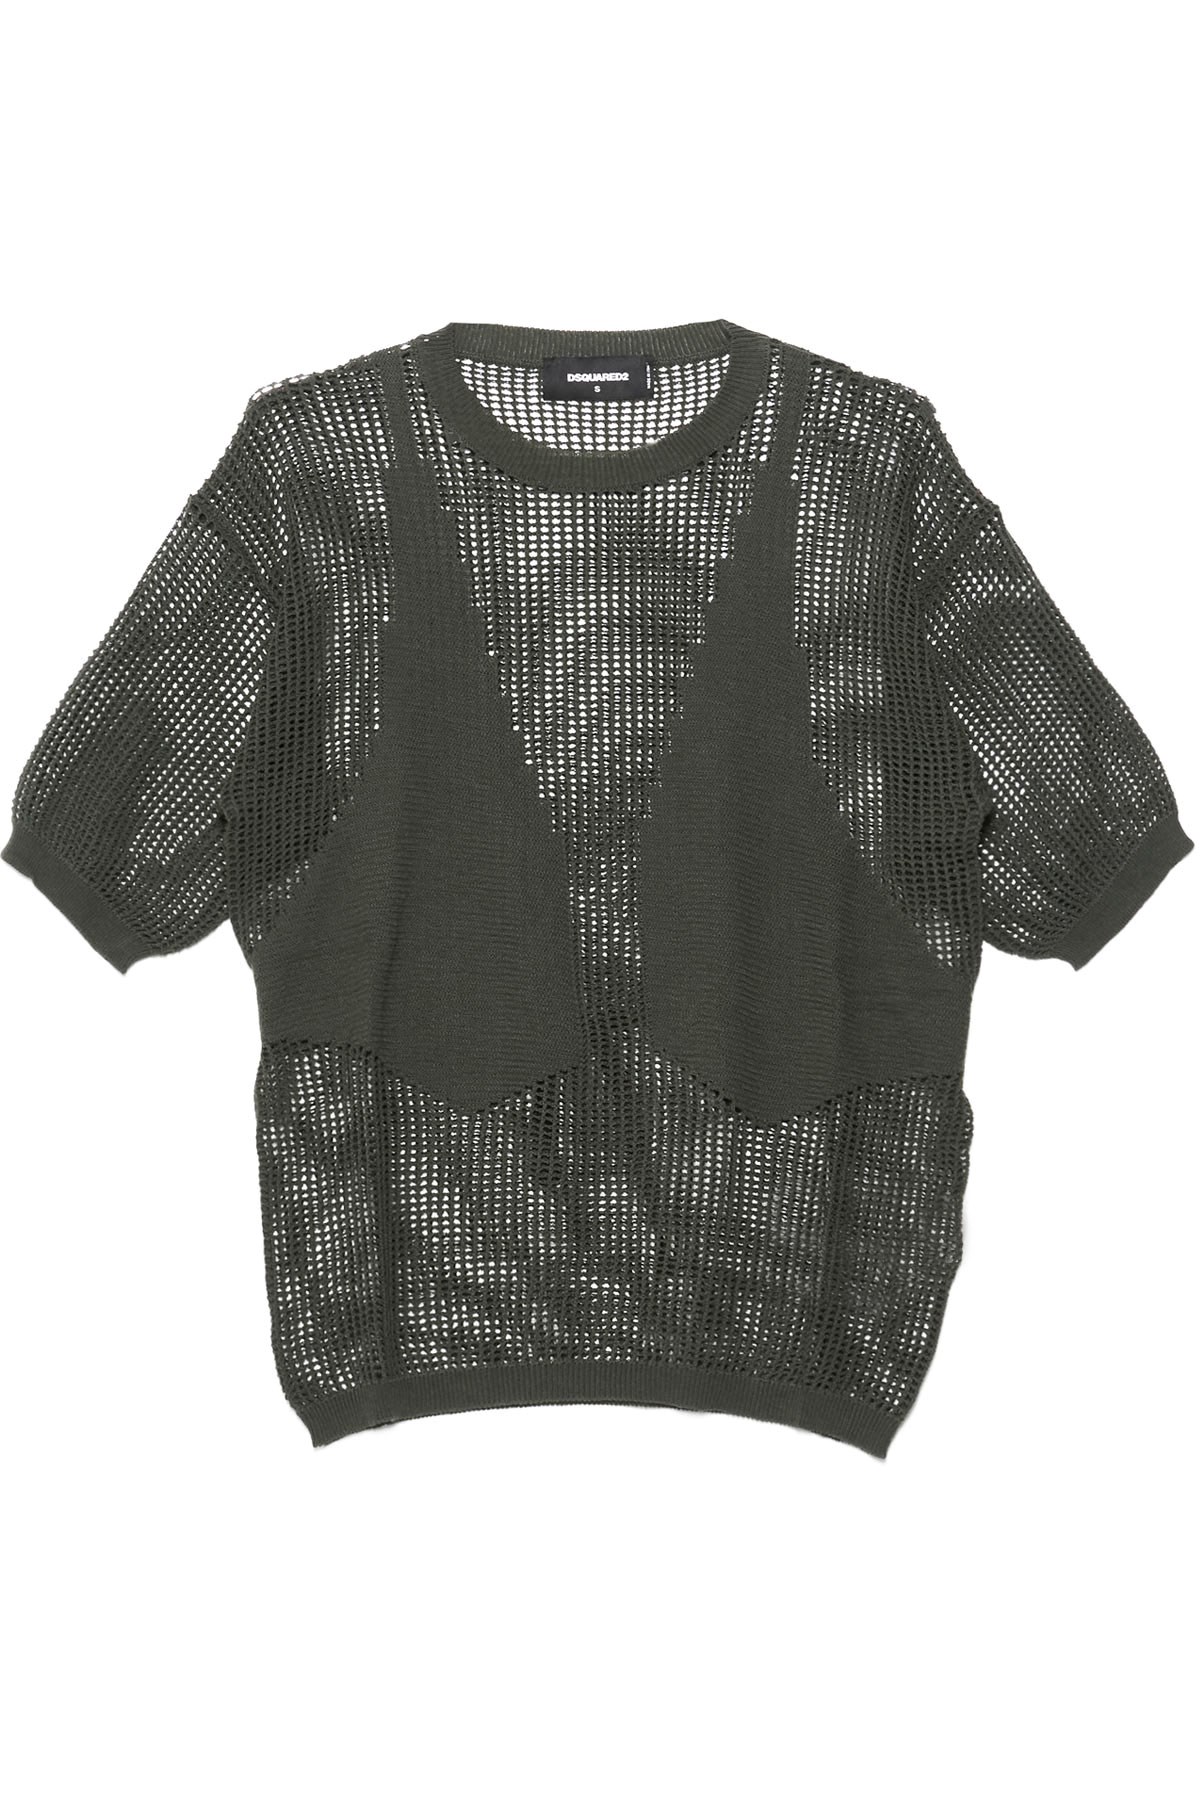 DSQUARED2 Vest Intarsia Net Sweater